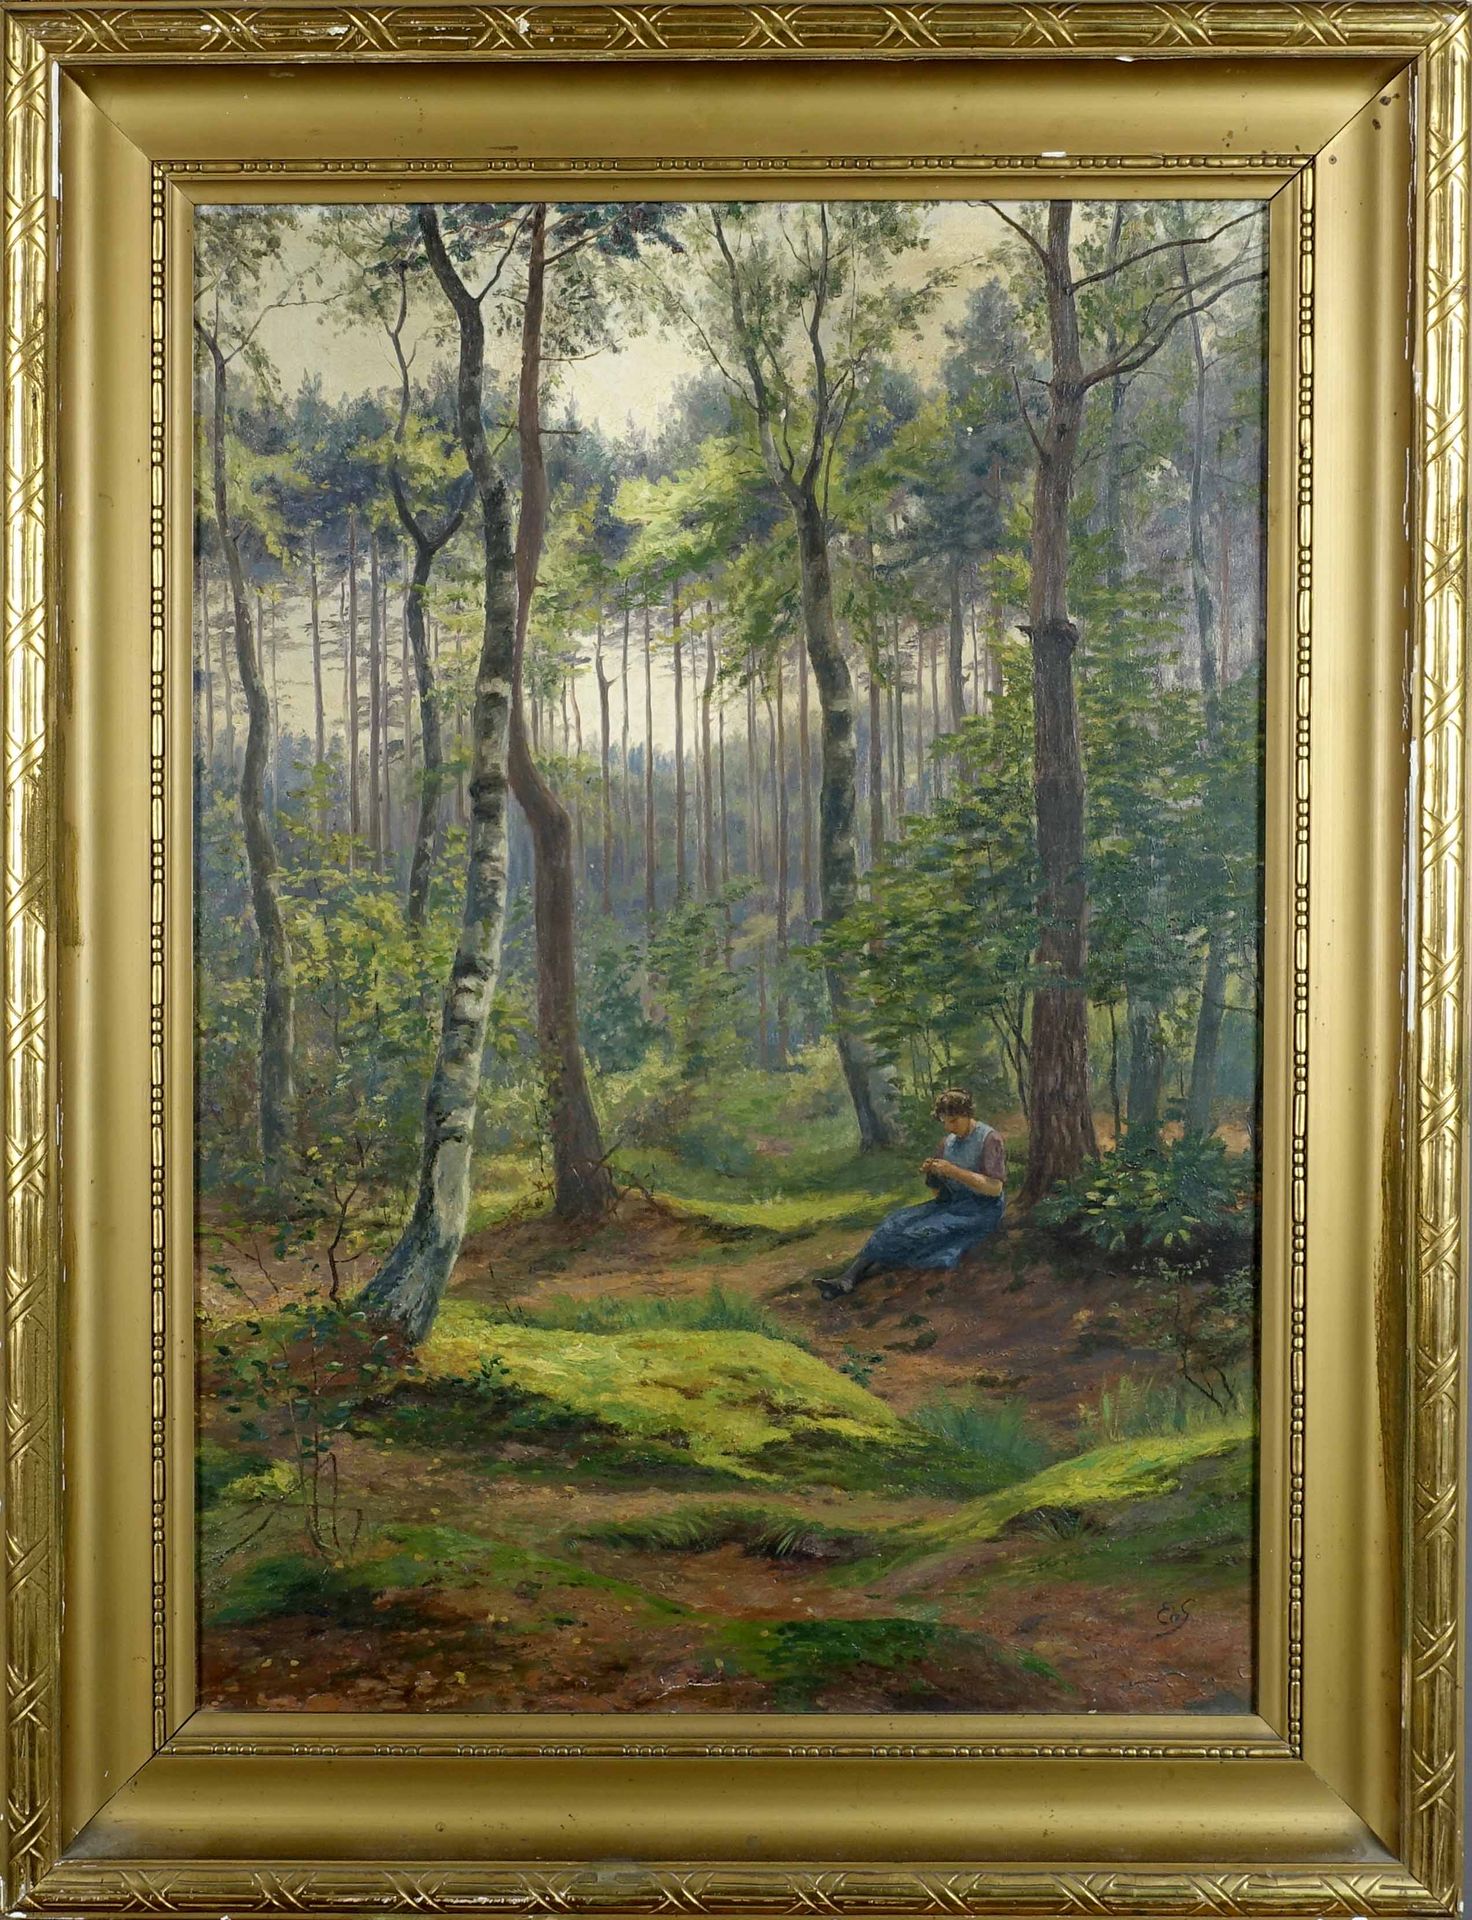 Edmond De Schampheleer (1824-1899). Farm girl in an undergrowth. Oil on canvas, &hellip;